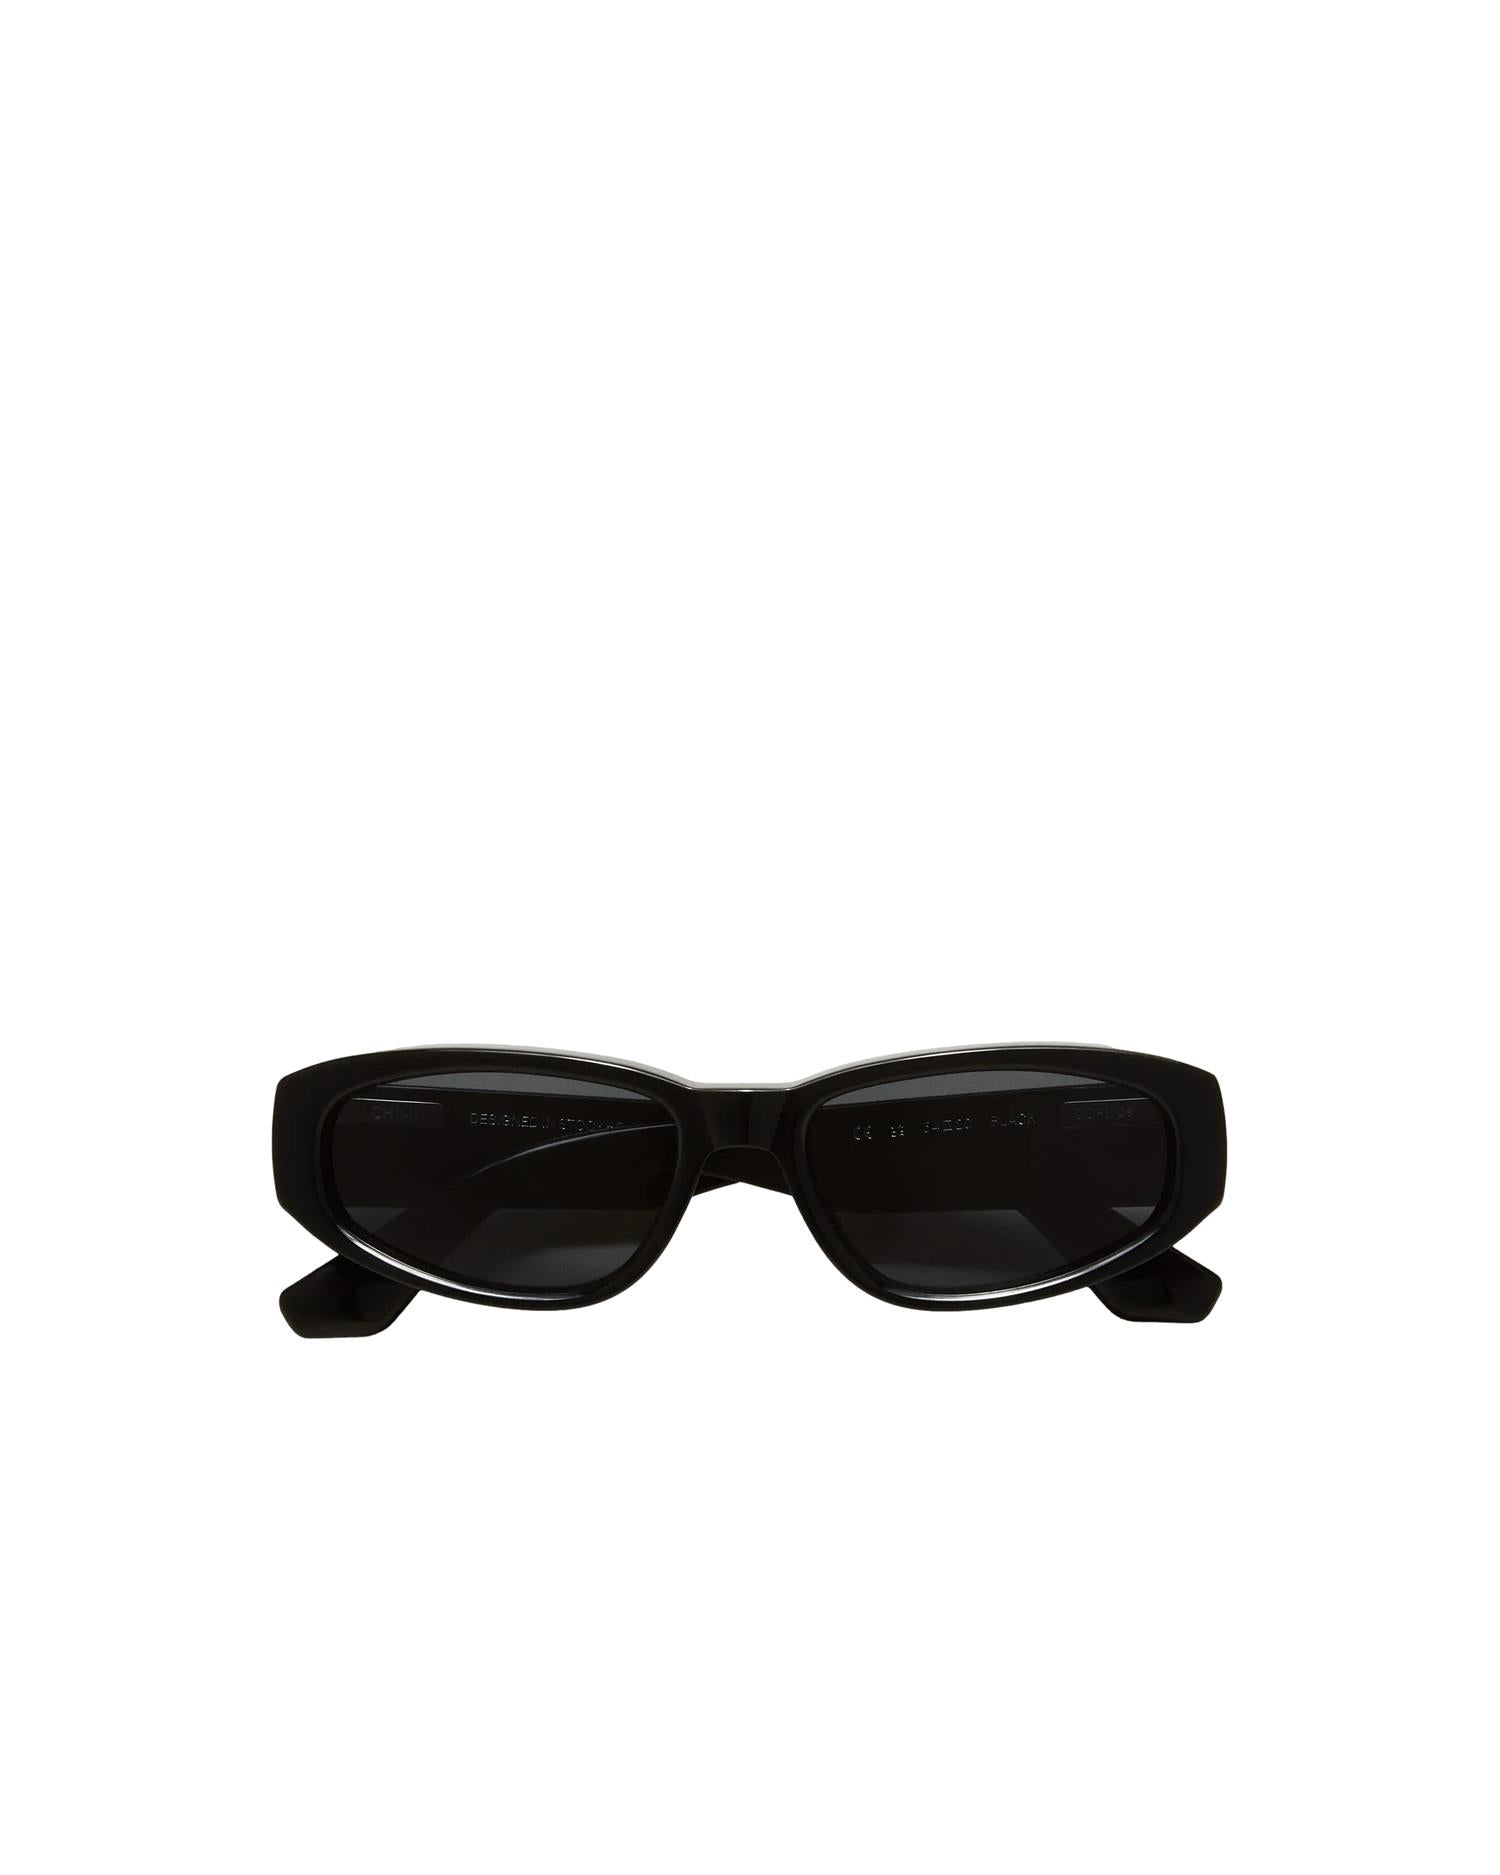 Chimi Eyewear 09 Black Solbriller Sort - modostore.no